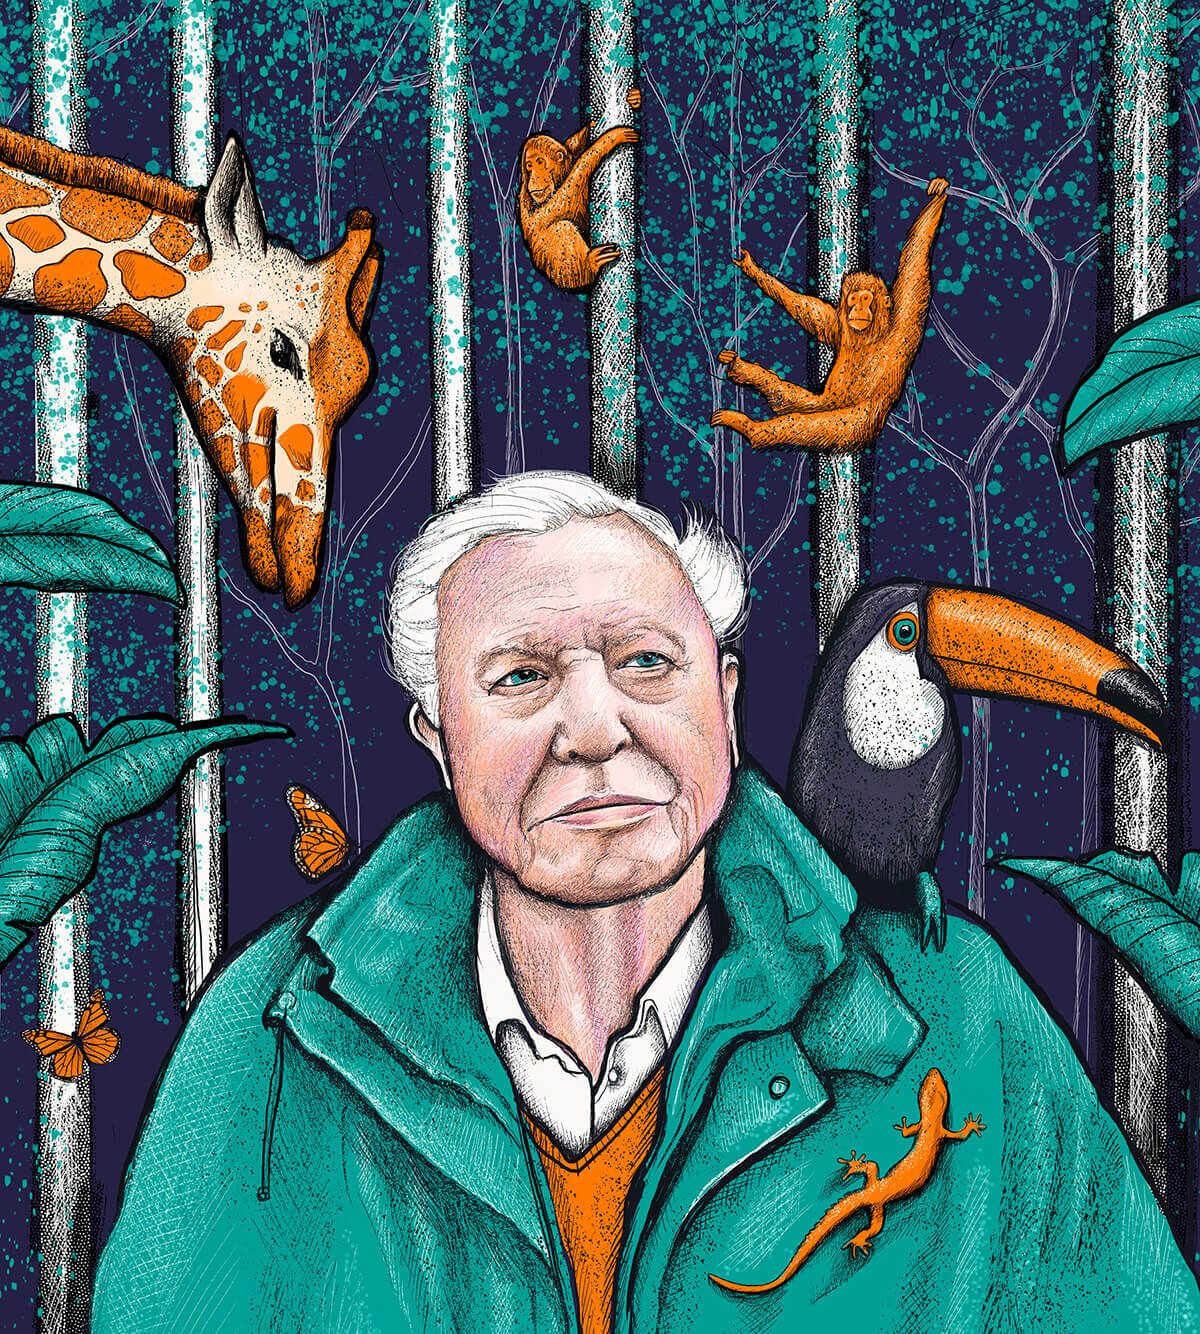 David-Attenborough-portrait-illustration-lisa-maltby.jpg